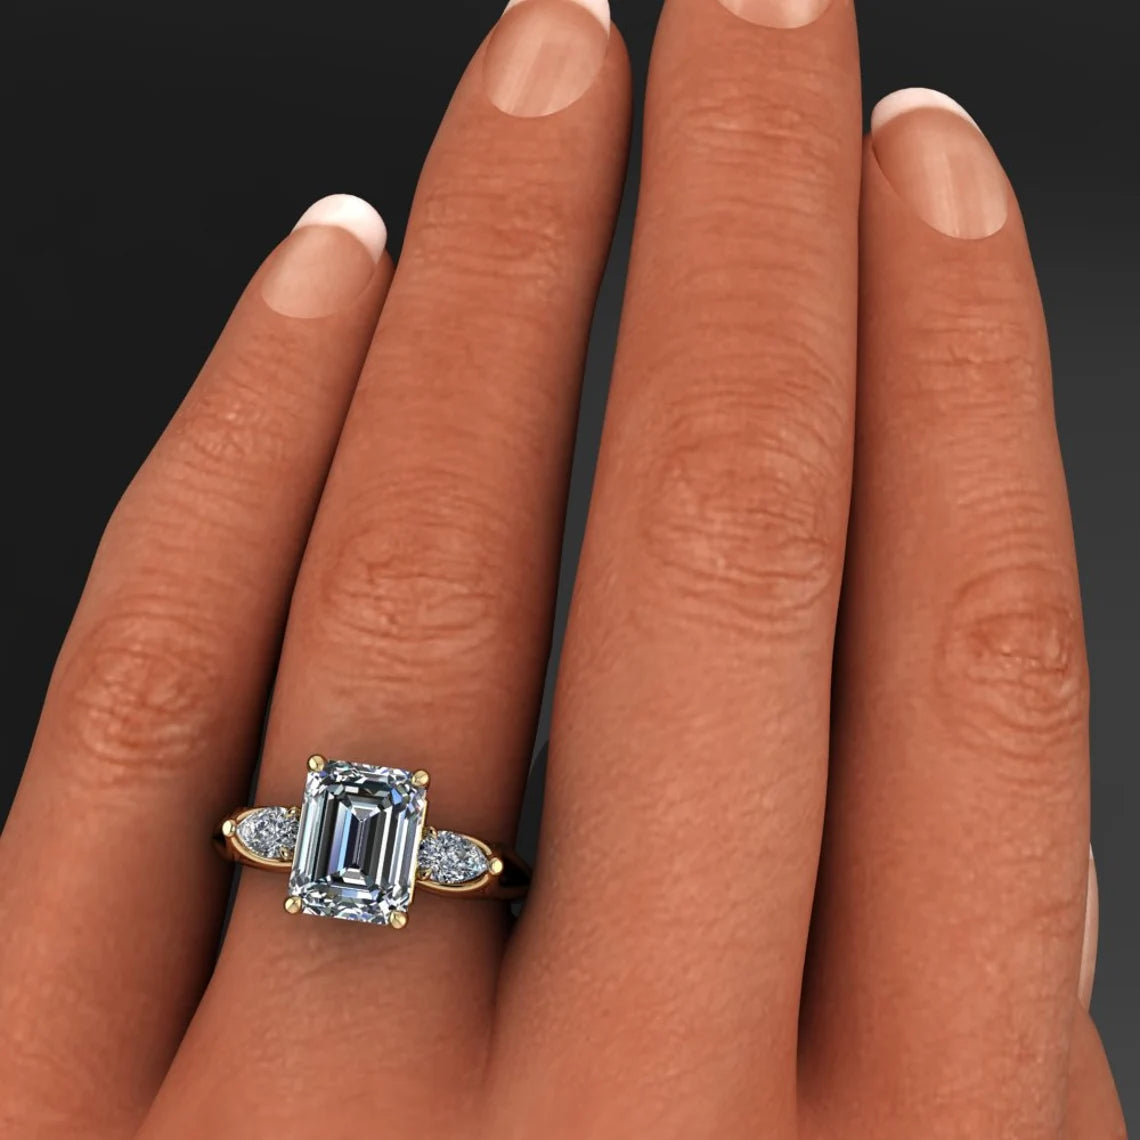 2 carat emerald cut ZAYA moissanite engagement ring - annabelle ring - J Hollywood Designs